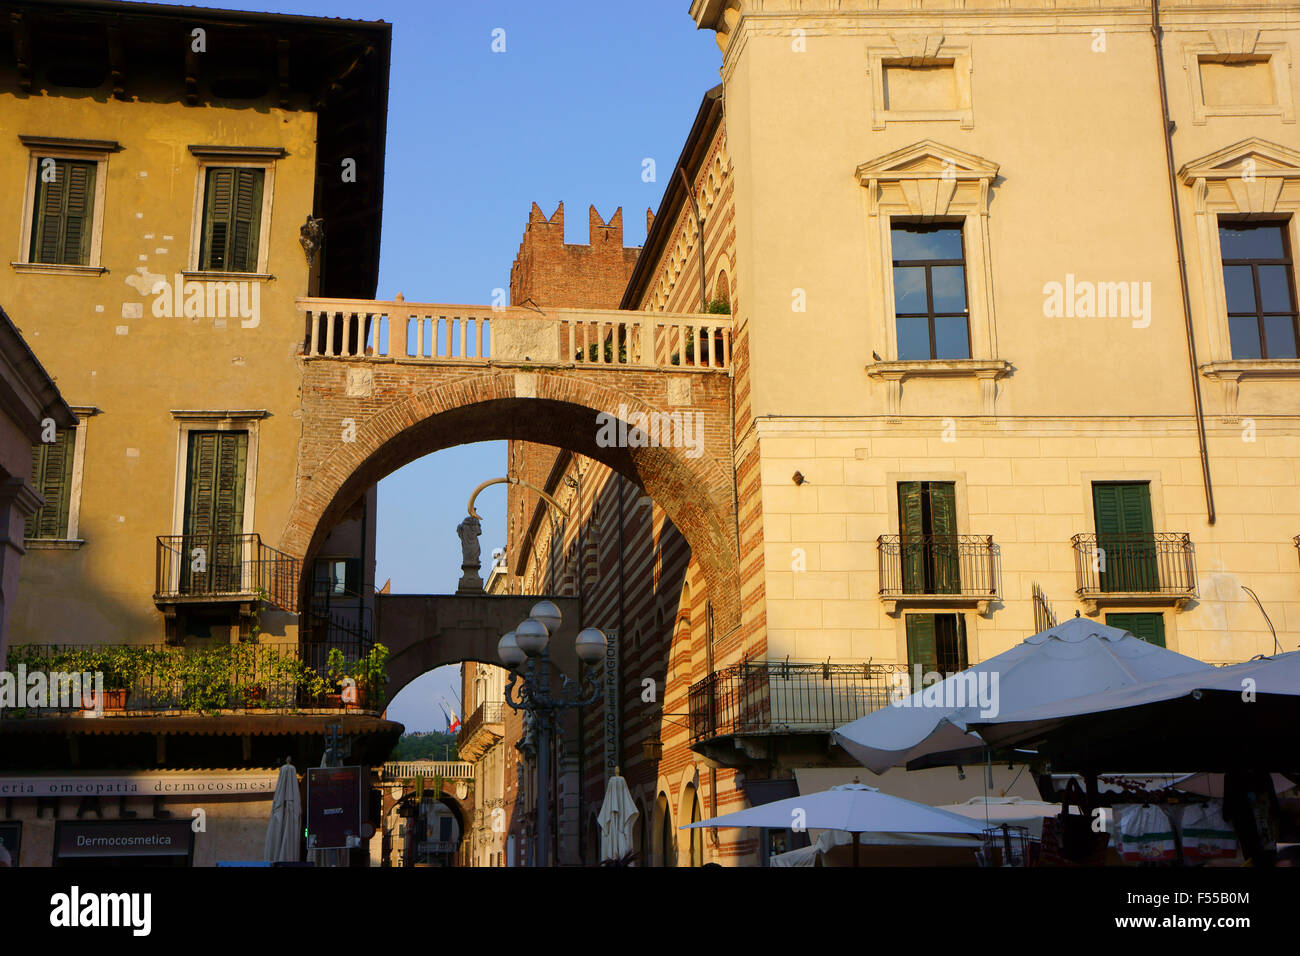 Rue avec arches à Palazzo della Ragione, Piazza del Erbe et Piazza dei Signori, ville historique de Vérone, Vénétie, Italie Banque D'Images